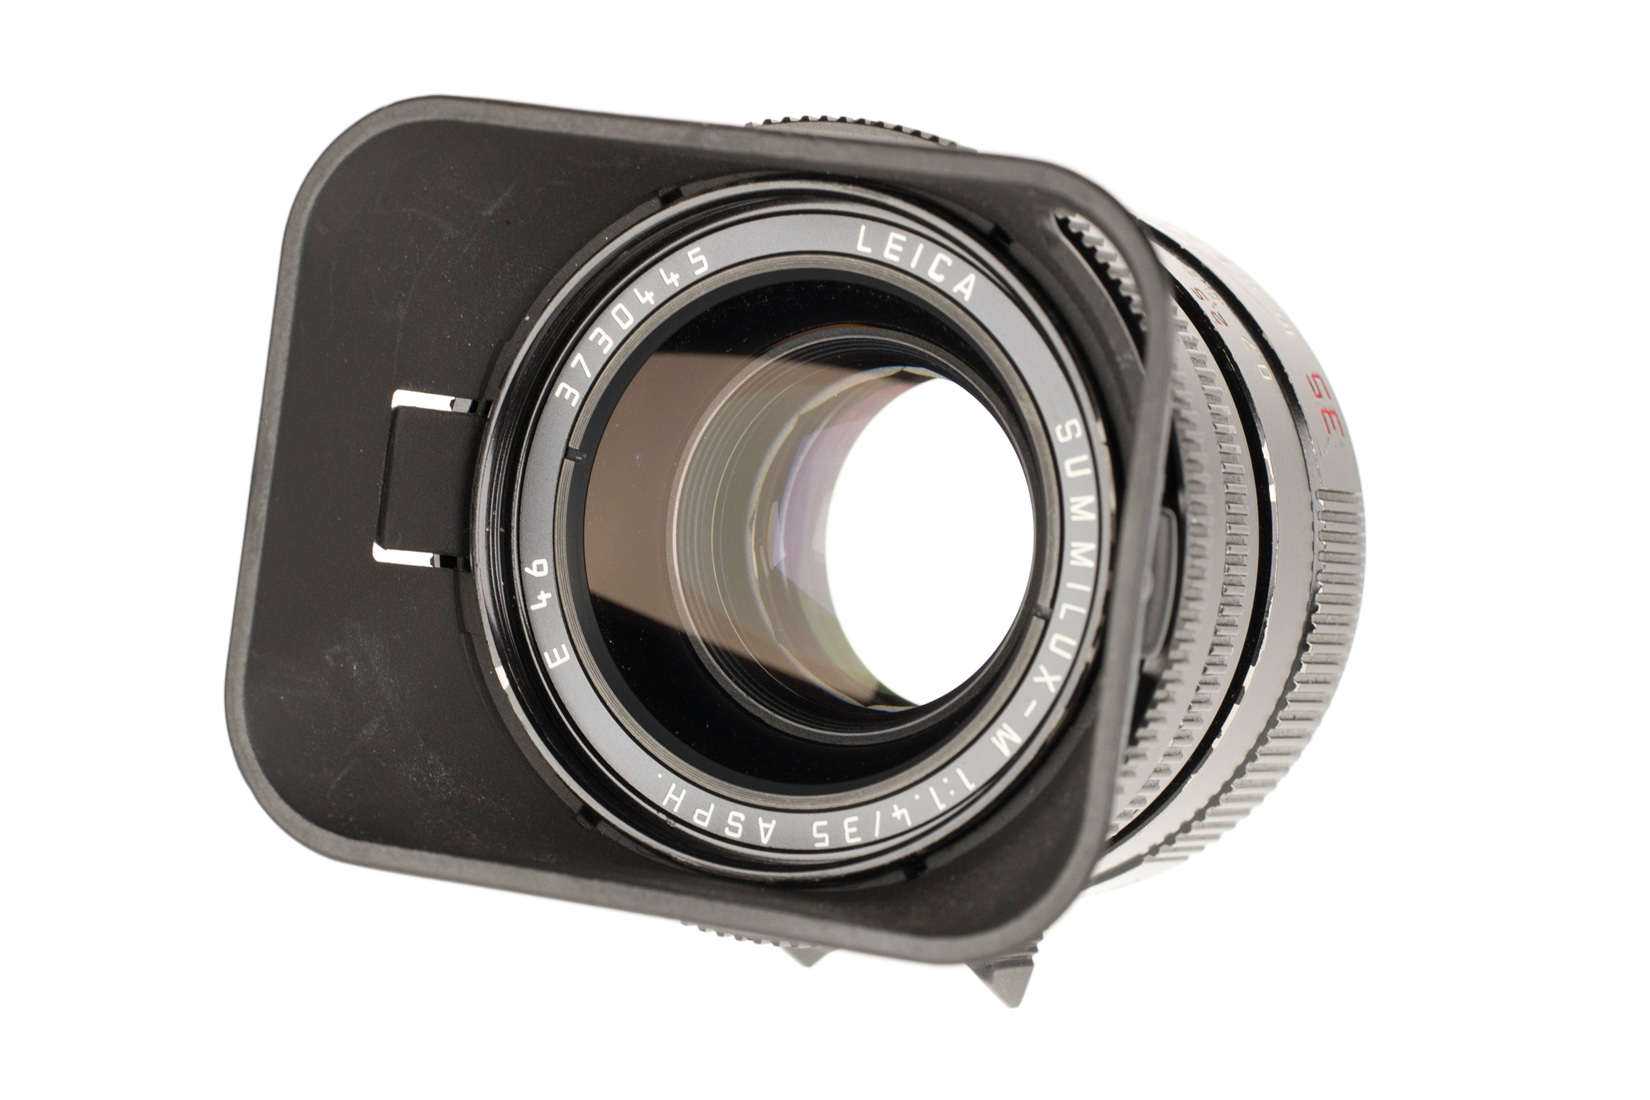 Leica Summilux 1:1.4/35mm ASPH. black repainted